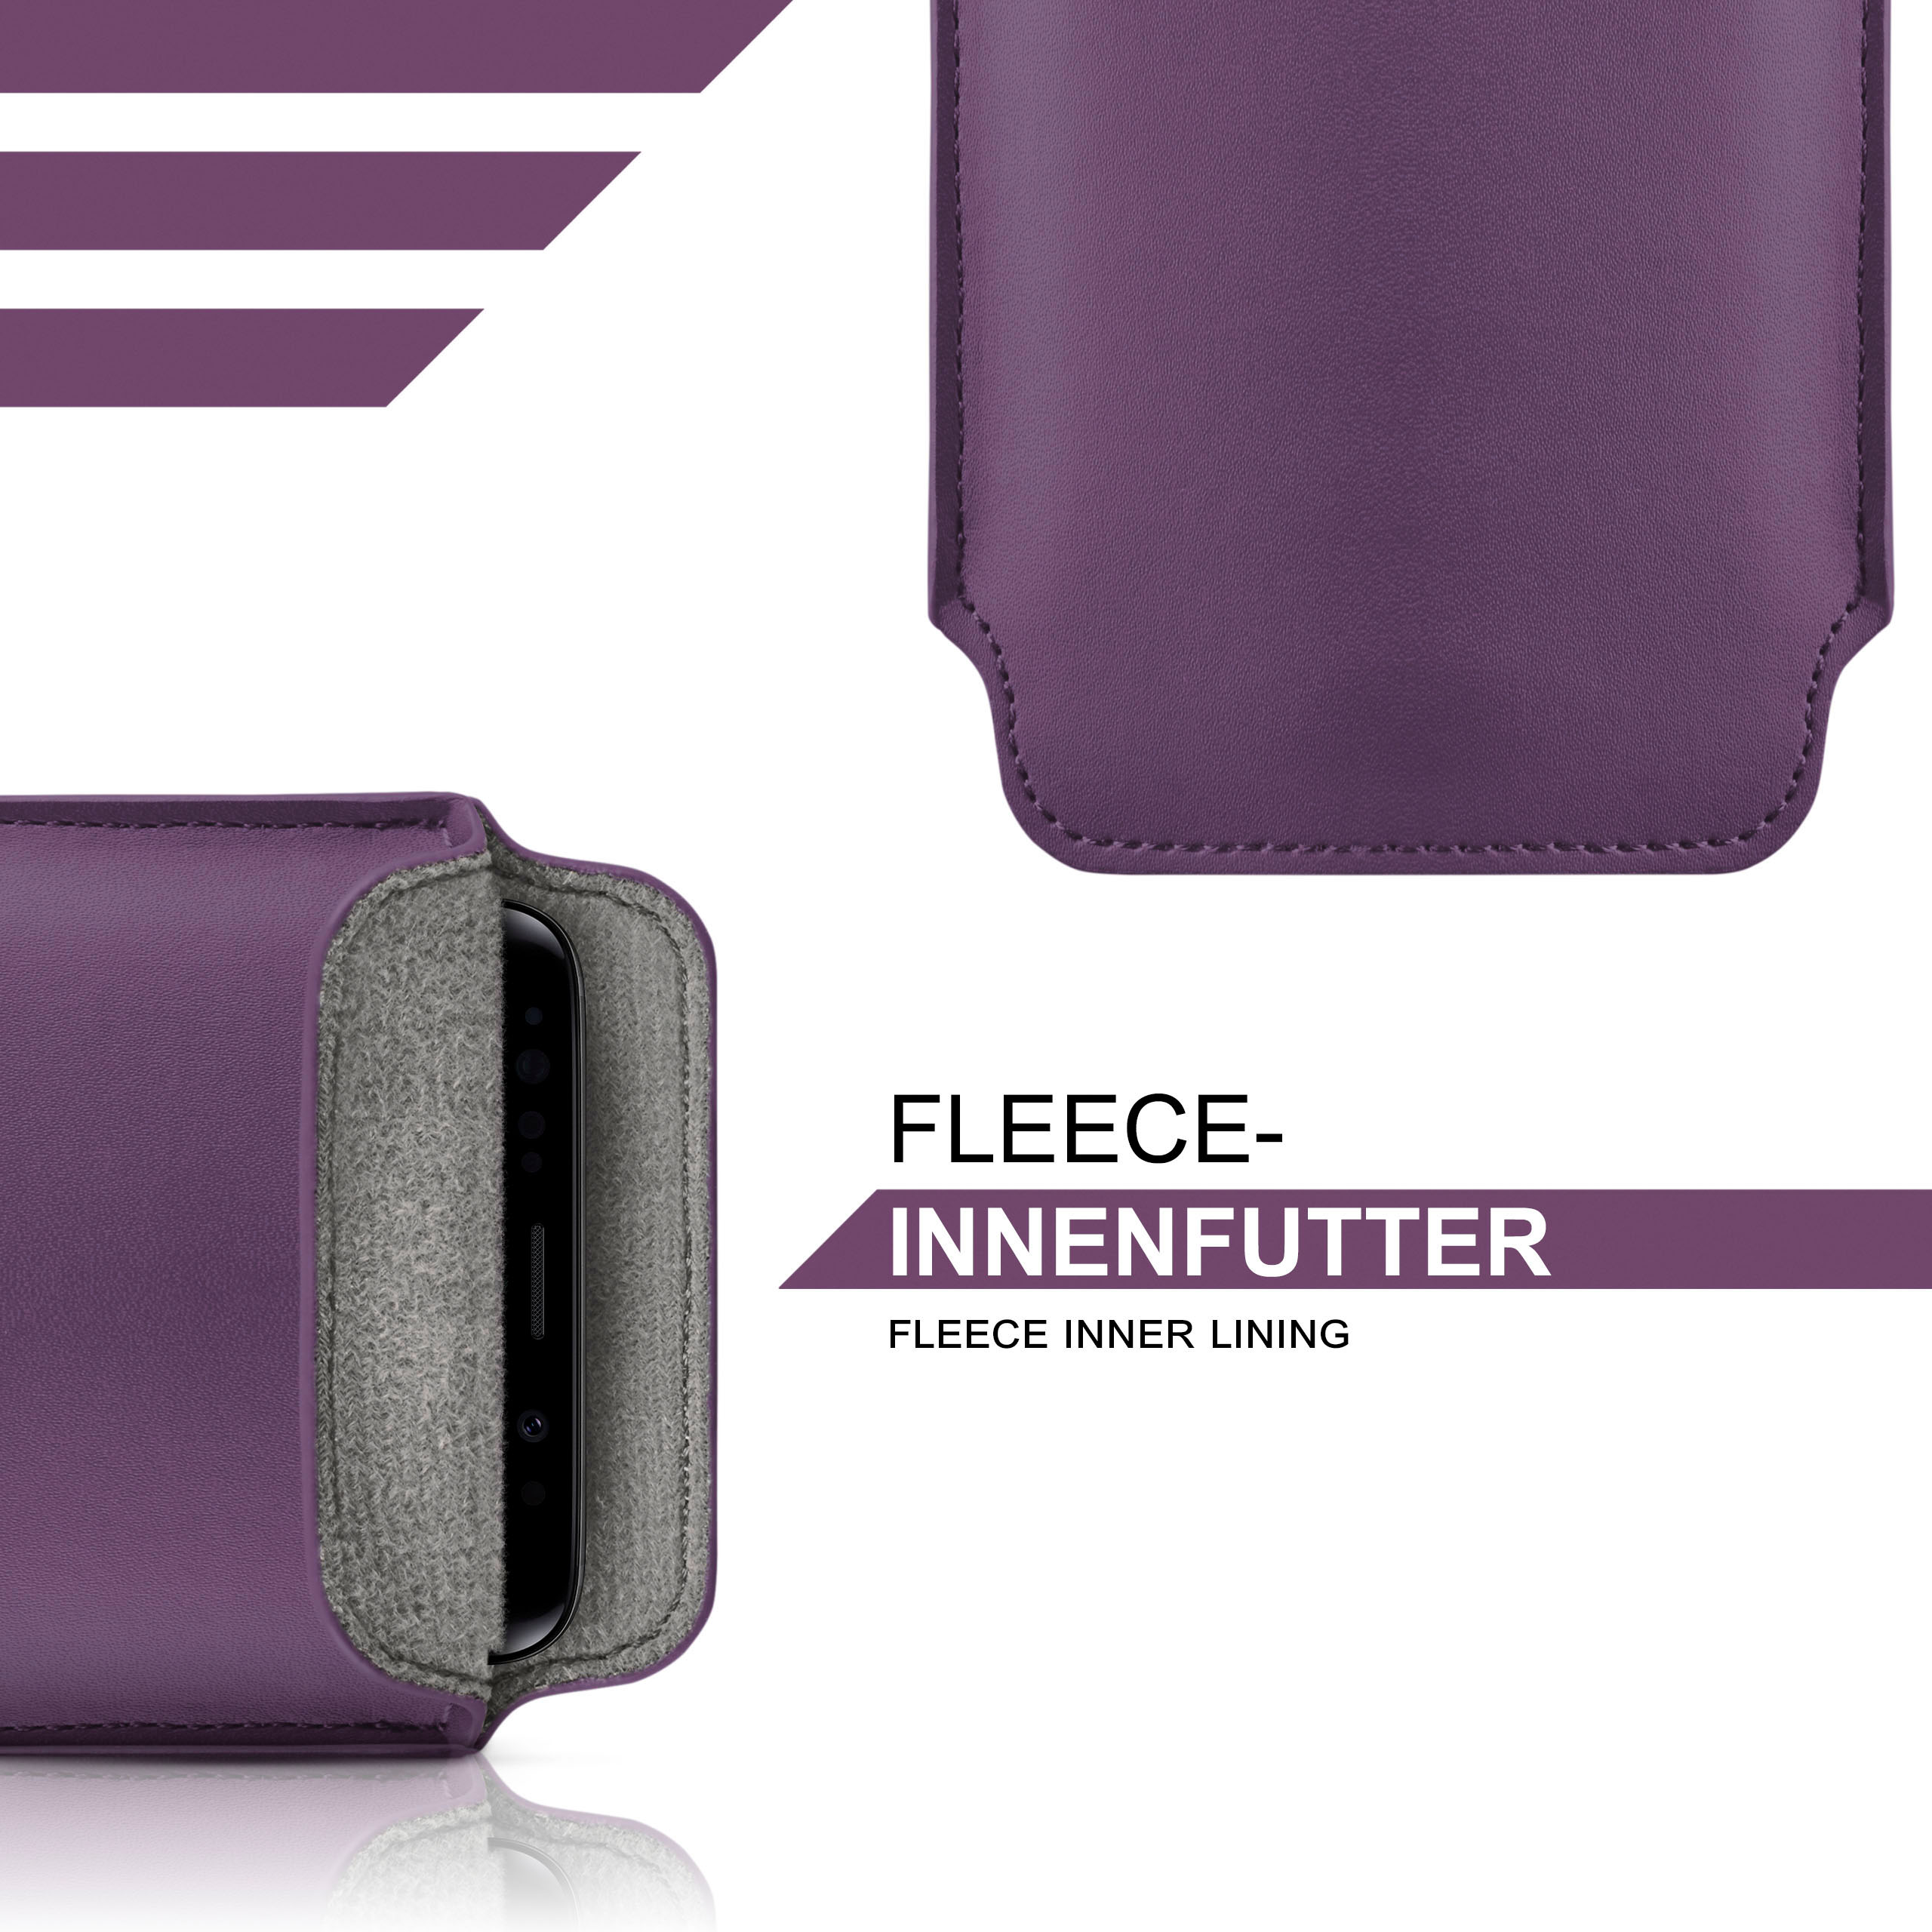 MOEX Slide Case, Full Cover, Xperia Premium, Indigo-Violet XZ Sony